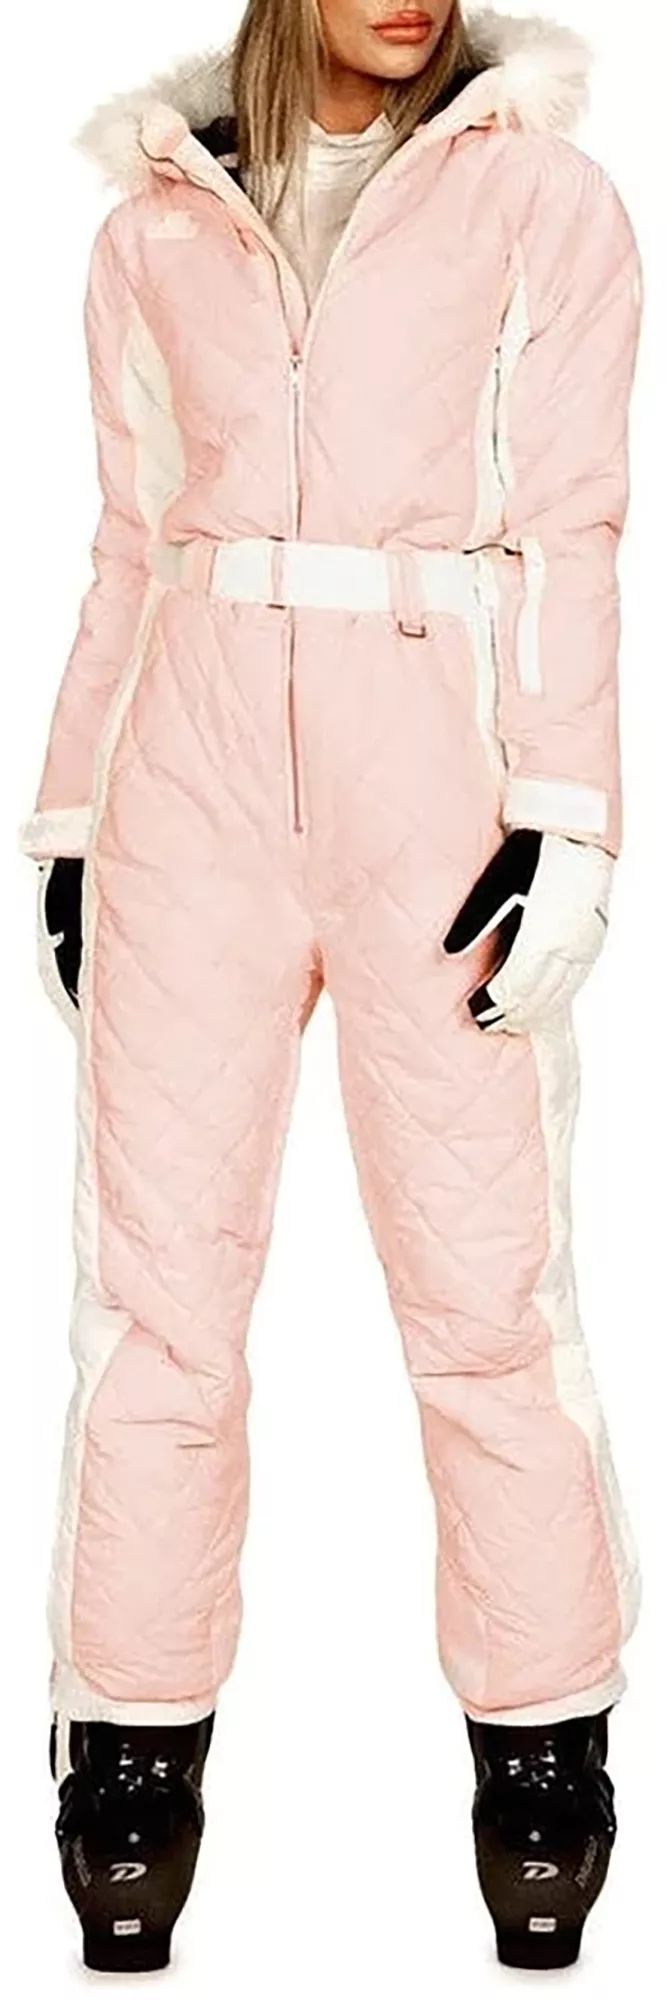 Tipsy Elves Women's Powder Pink Ski Suit, XS | Dick's Sporting Goods